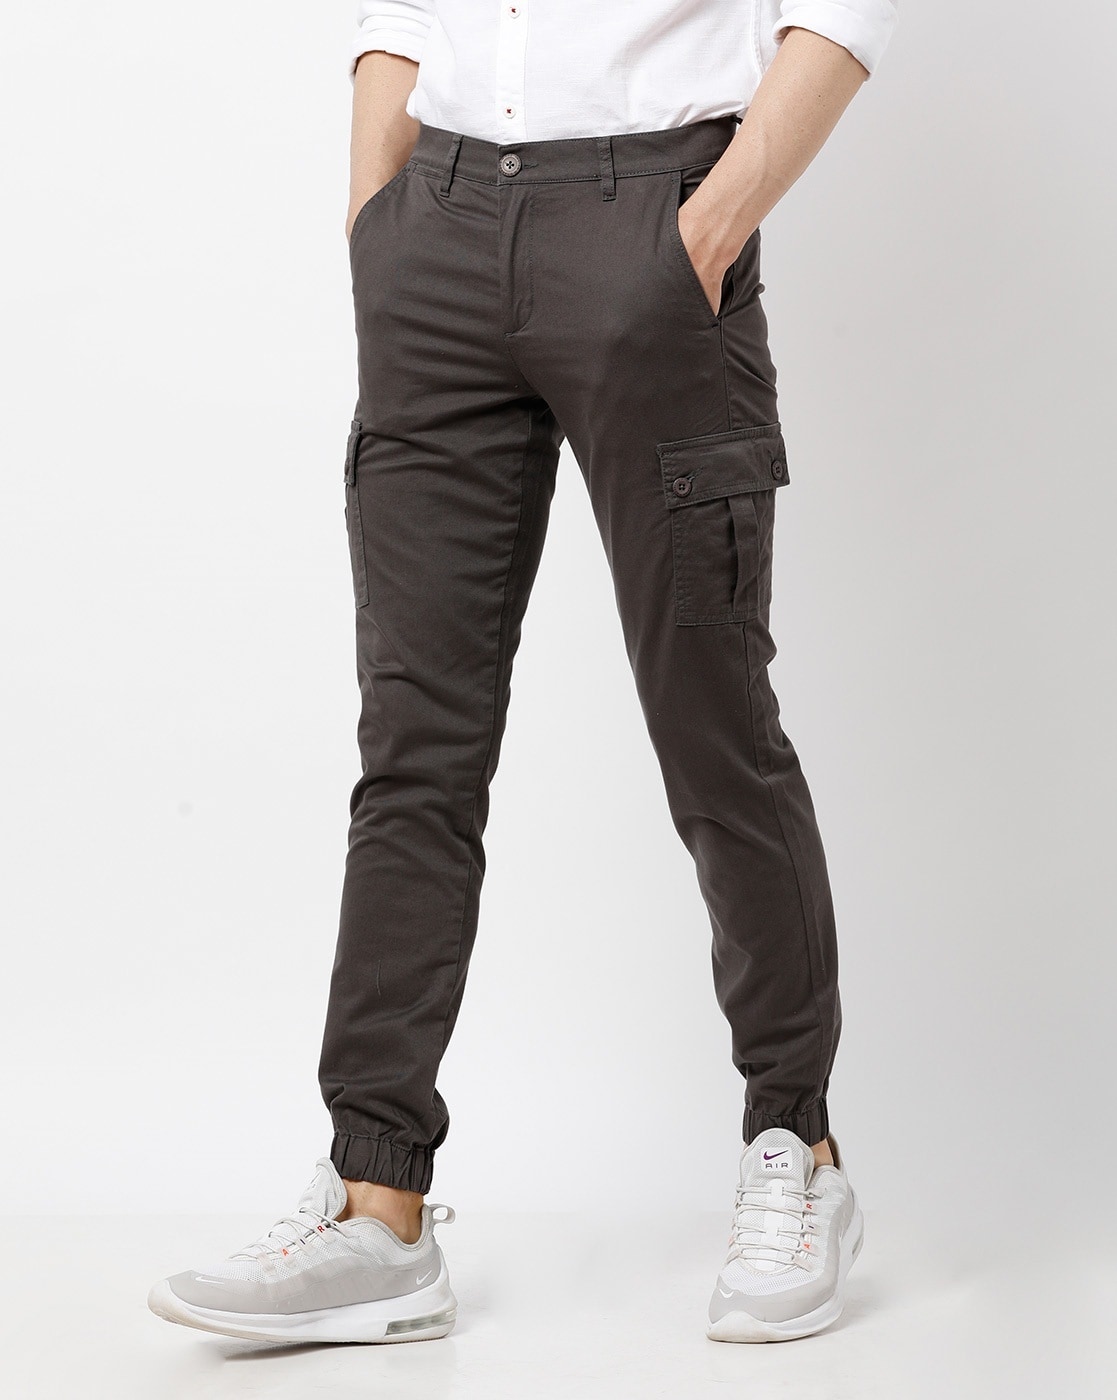 The Indian Garage Co Mens Slim Casual Pants 0419CARGO0210Green   Amazonin Fashion